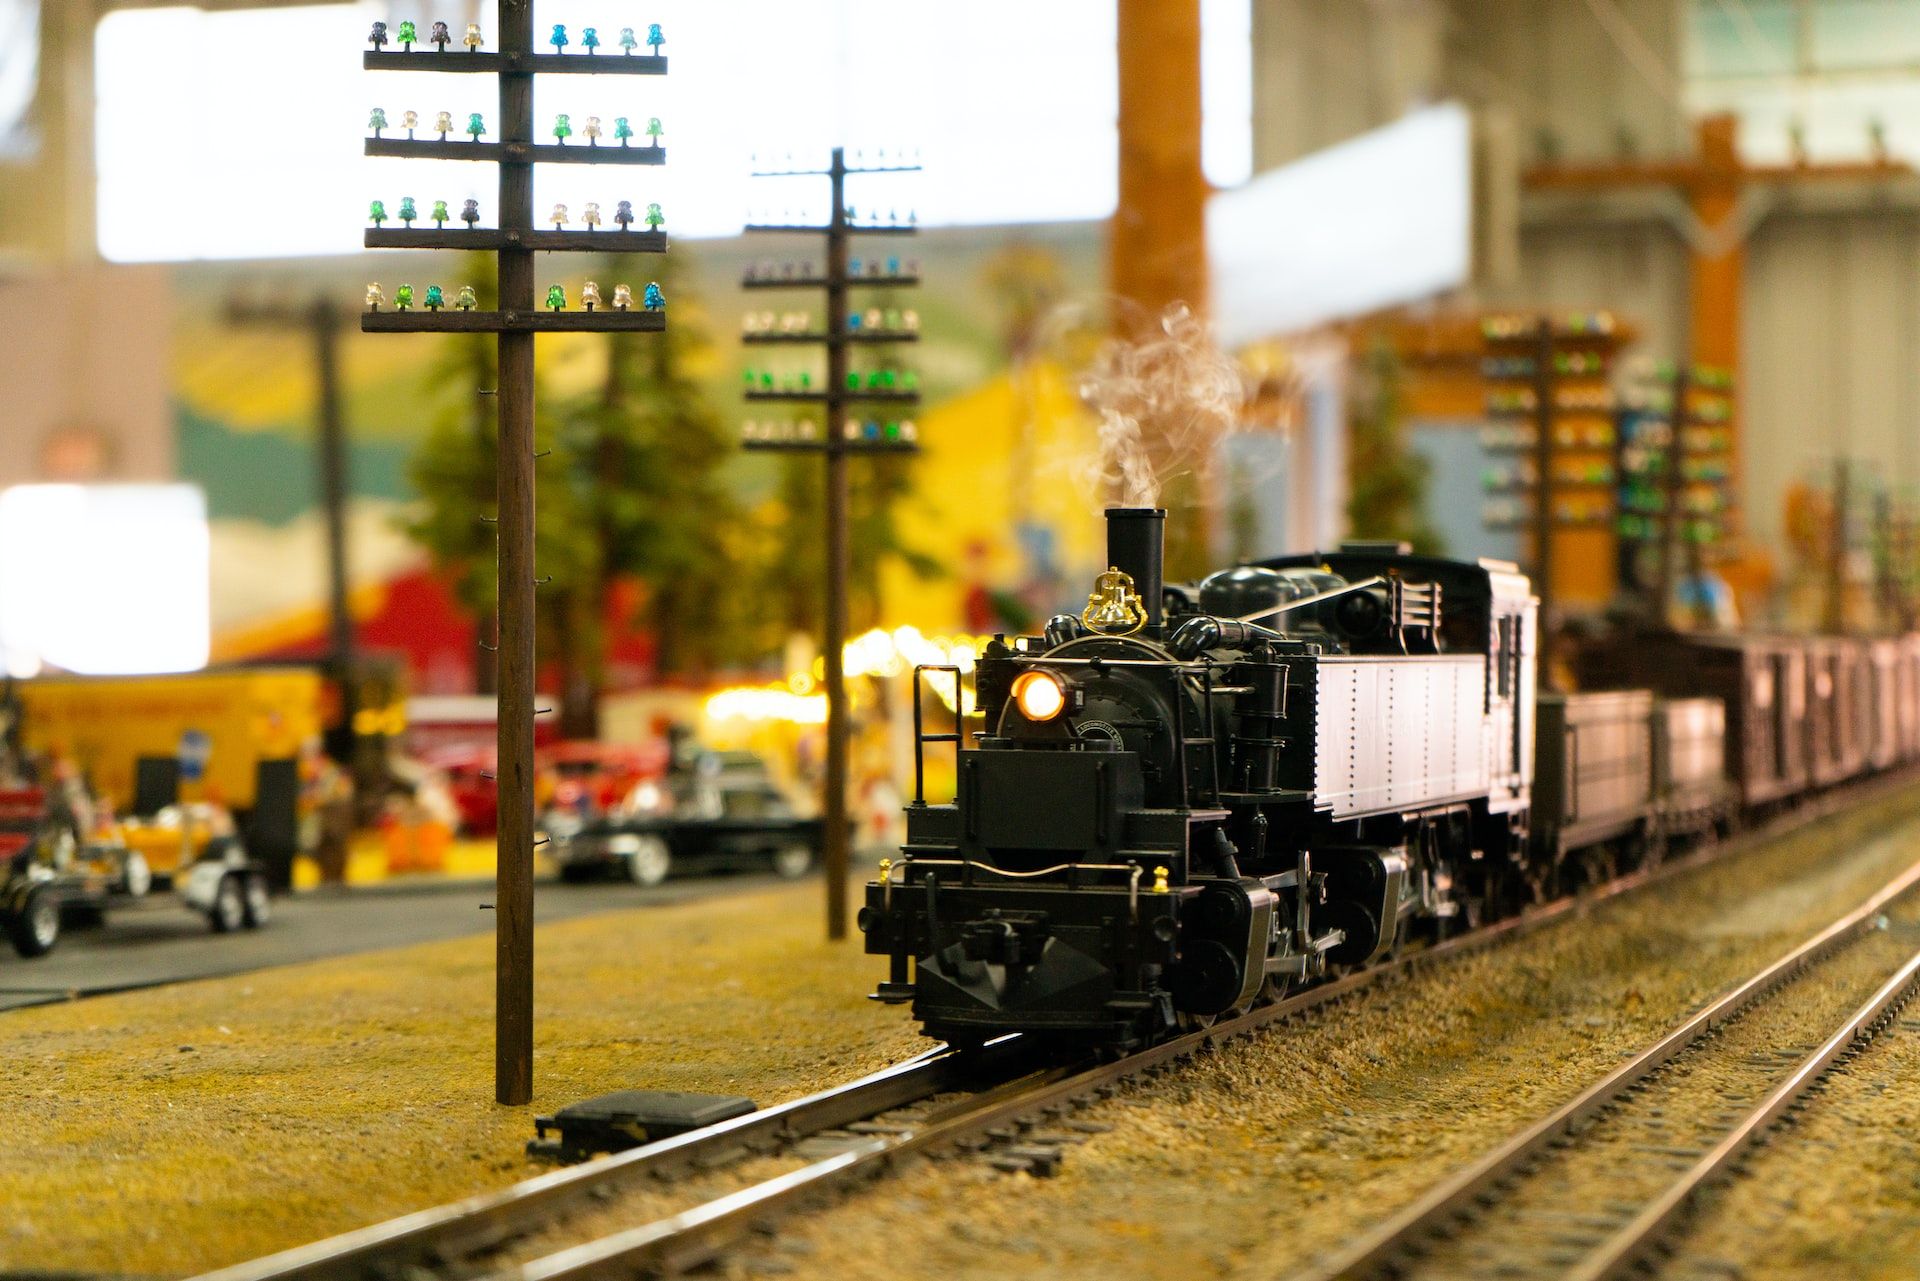 A model steam locomotive on an O gauge track layout